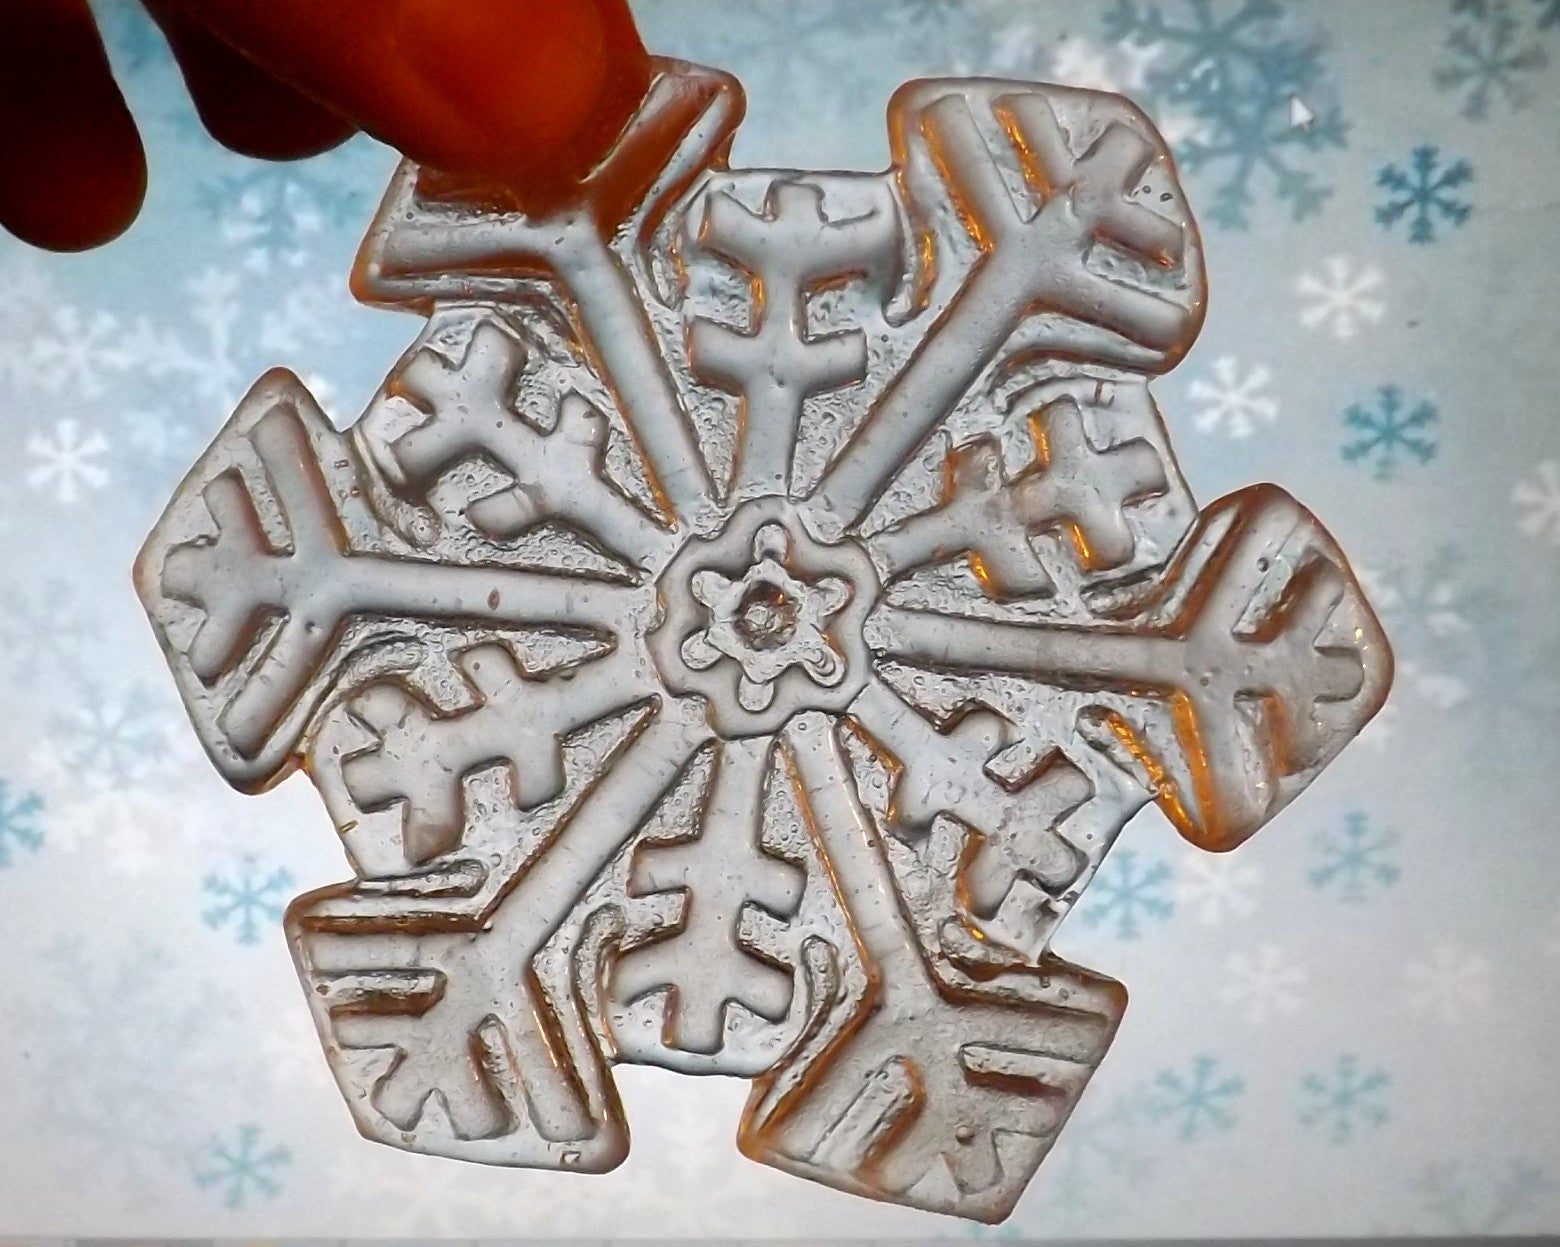 Snowflake Medium Silicone Cookie Mold – Artesão Cookie Molds